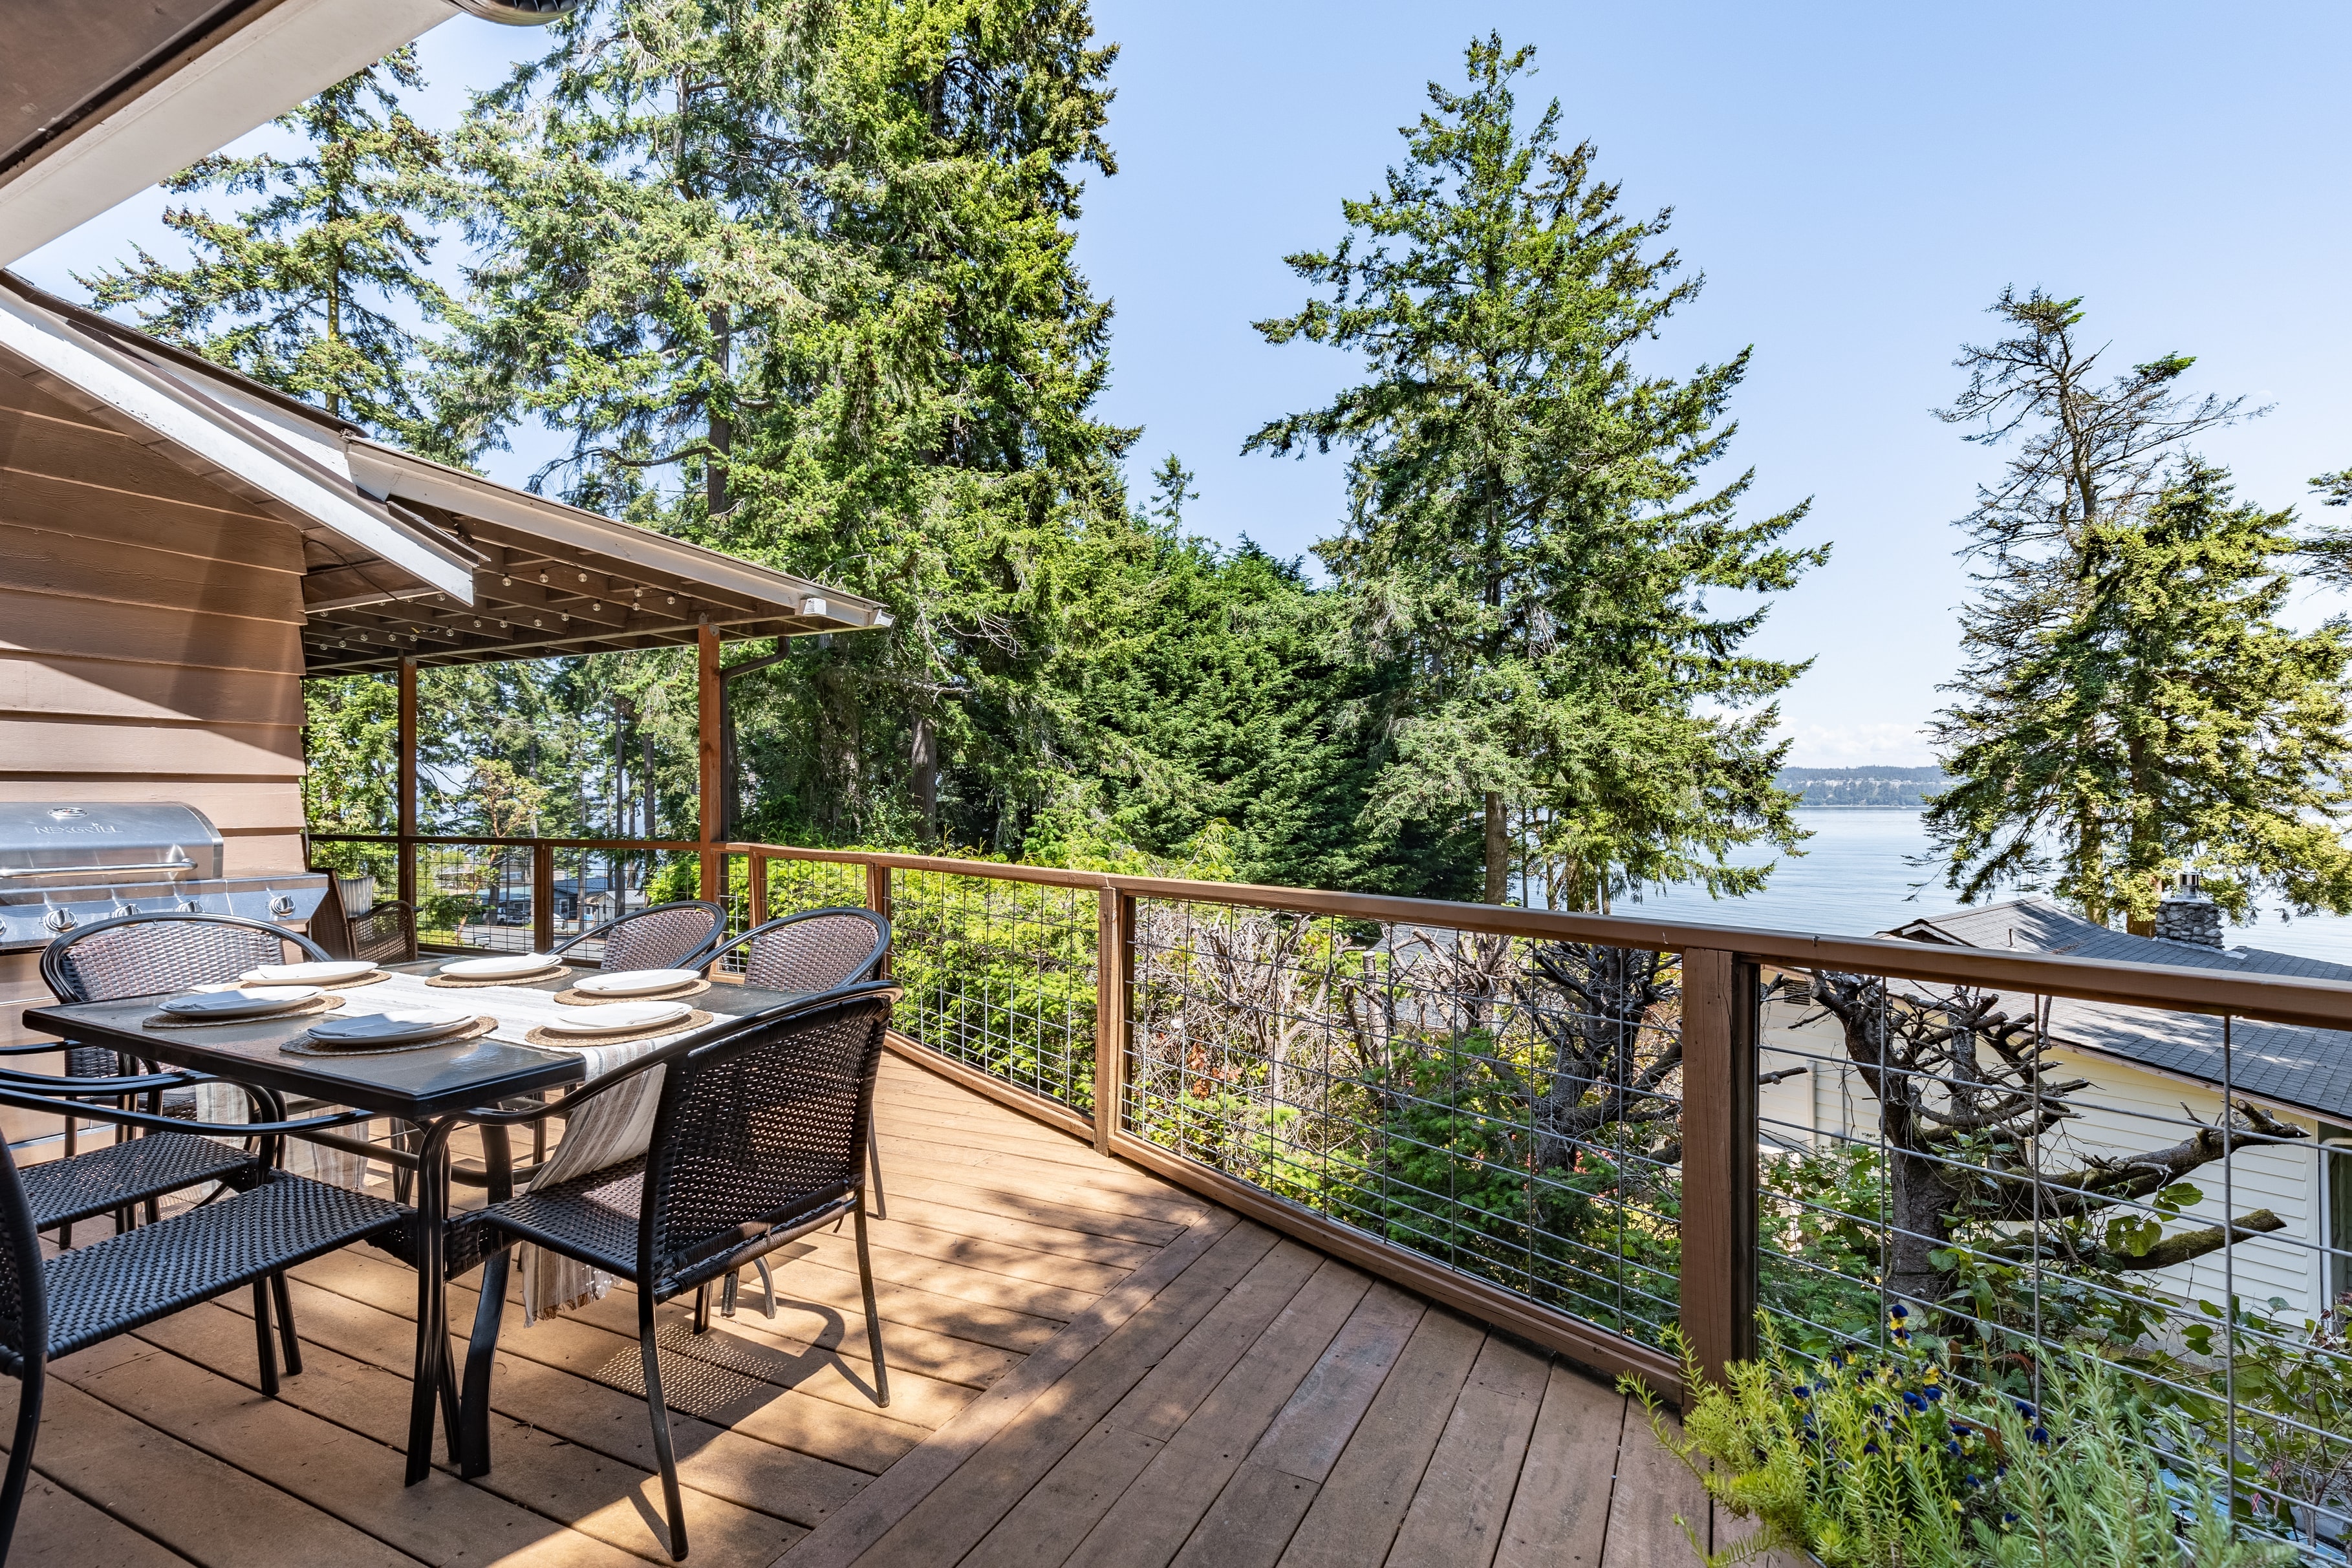 Enjoy breathtaking vistas from this expansive wrap-around deck.